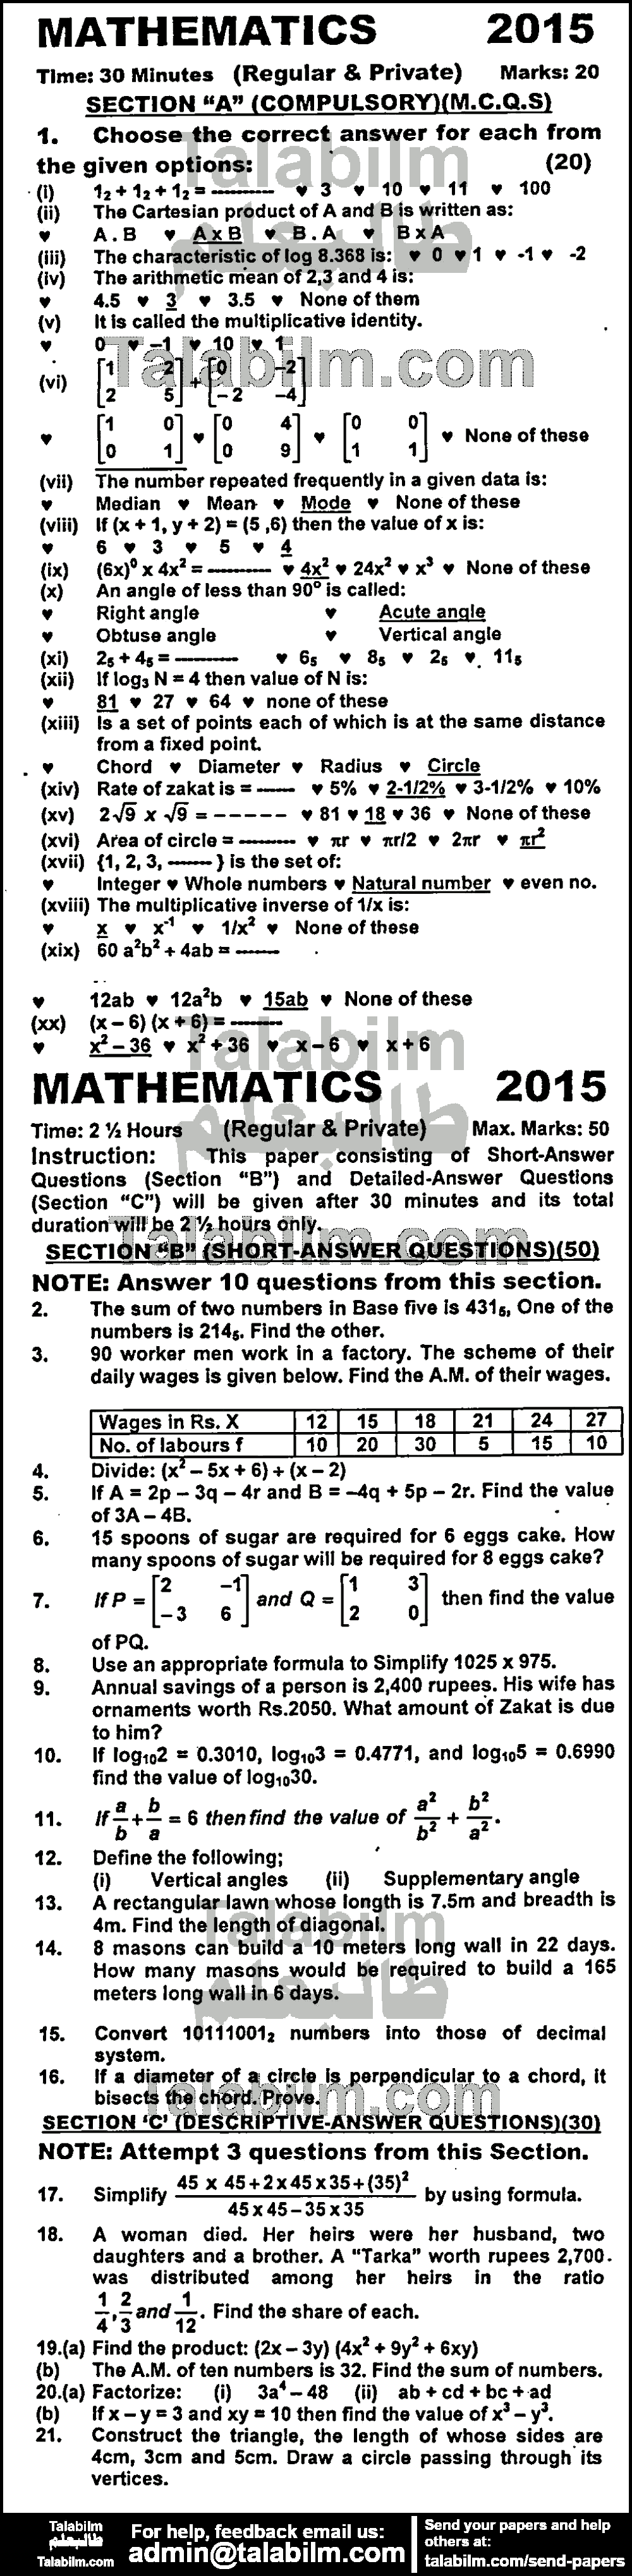 Math 0 past paper for English Medium 2015 Group-I